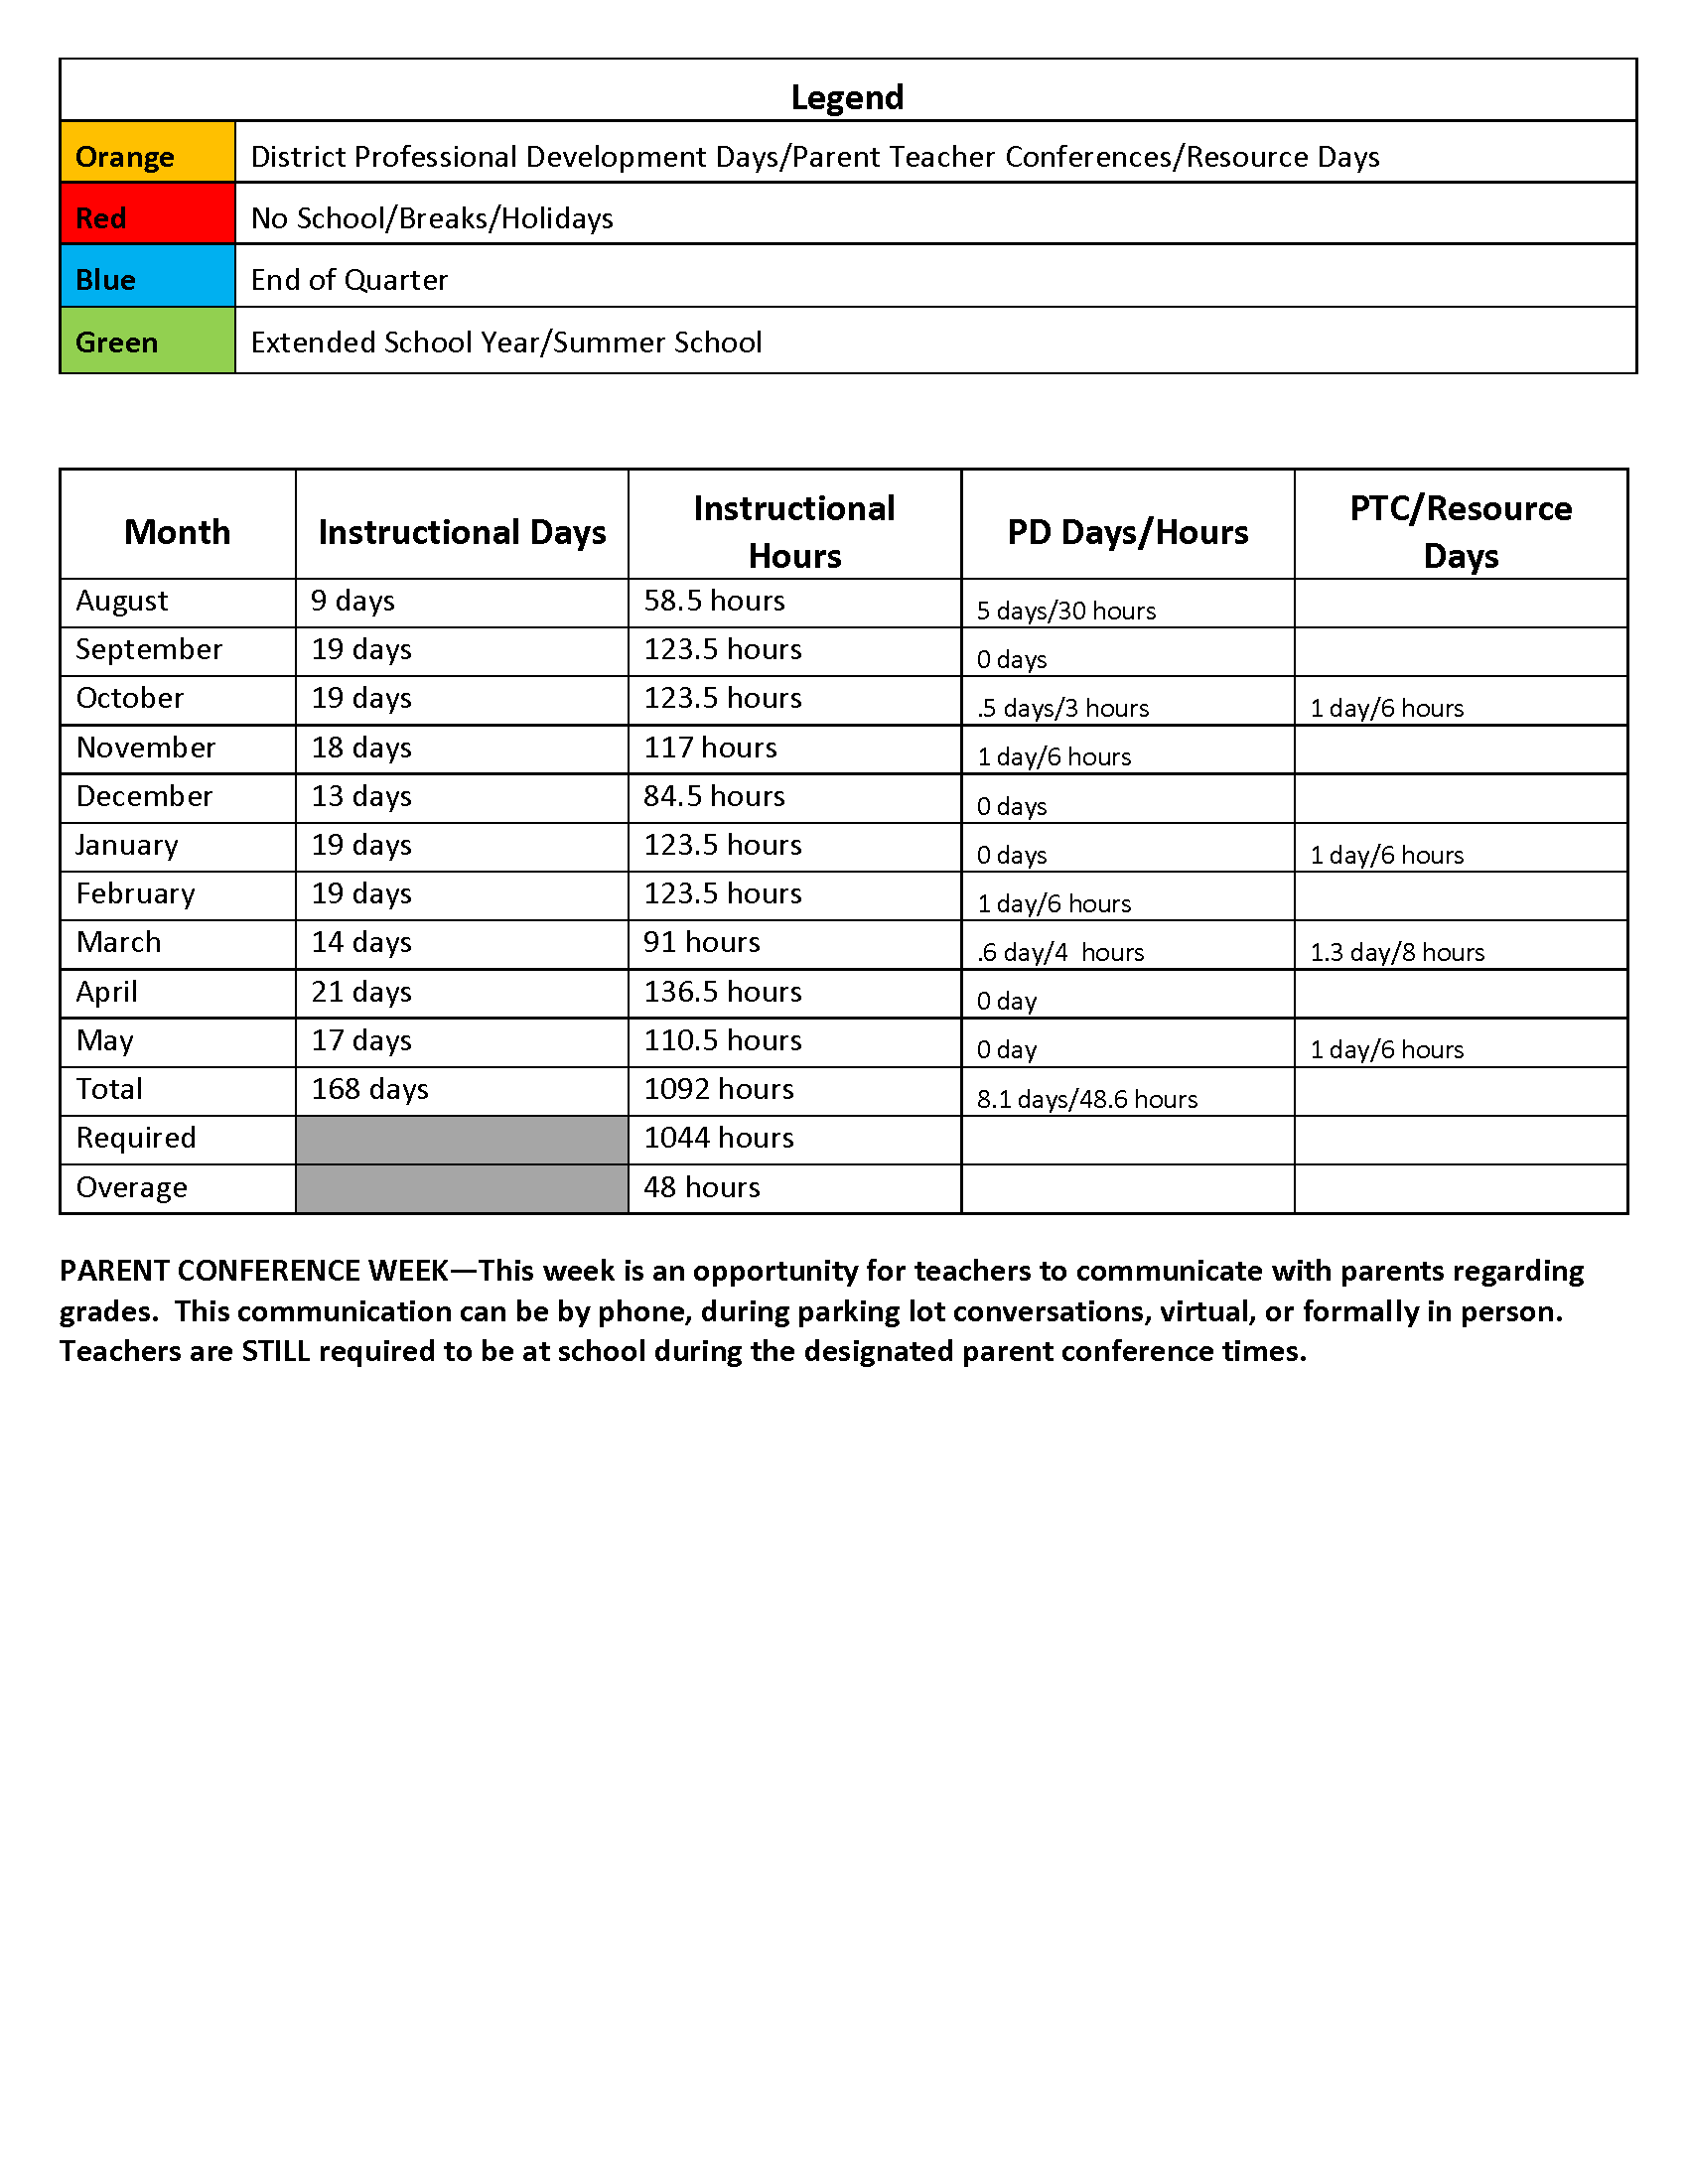 Instructional hours breakdown for each month on the school calendar 